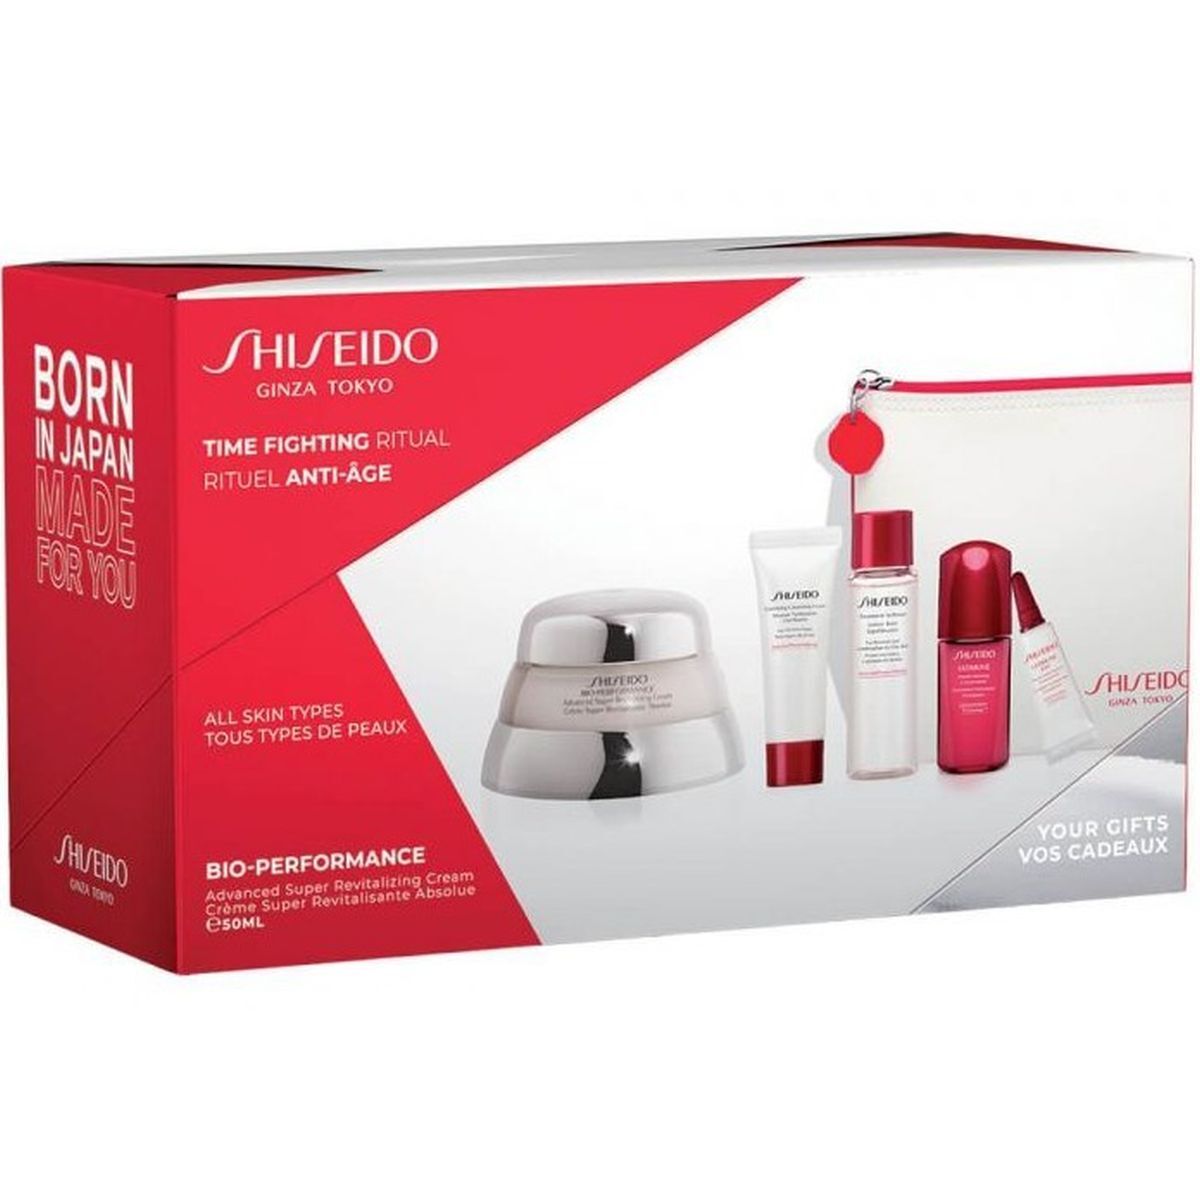 Shiseido - Bio Performance Advanced Super Revitaizing Creme 50 ml. Cofanetto